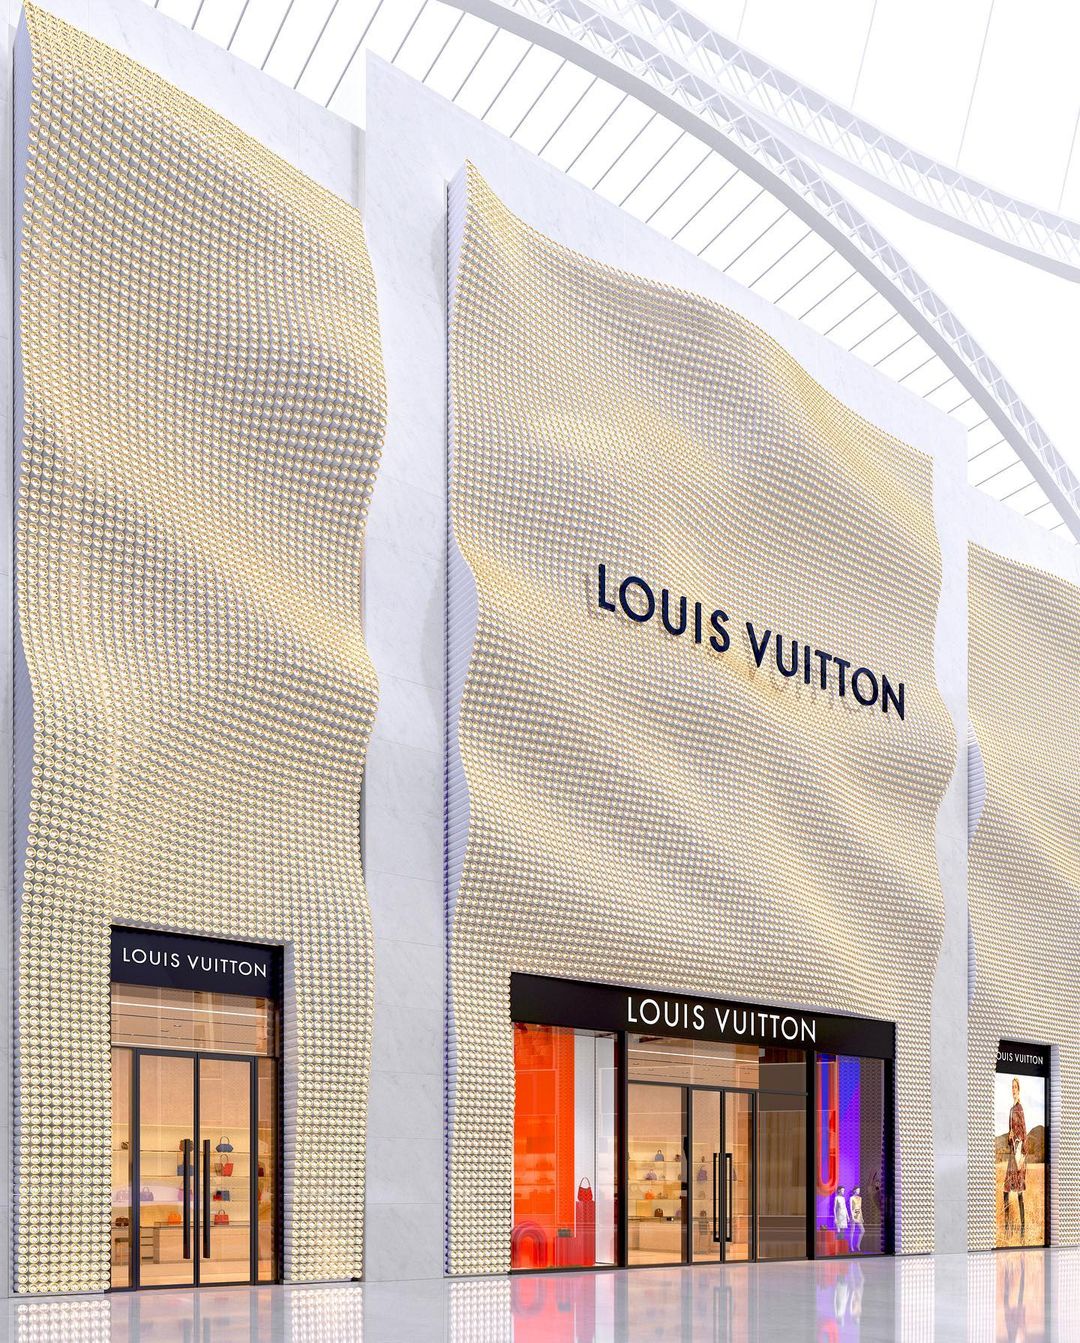 Qatar: Place Vendôme aims to dazzle region